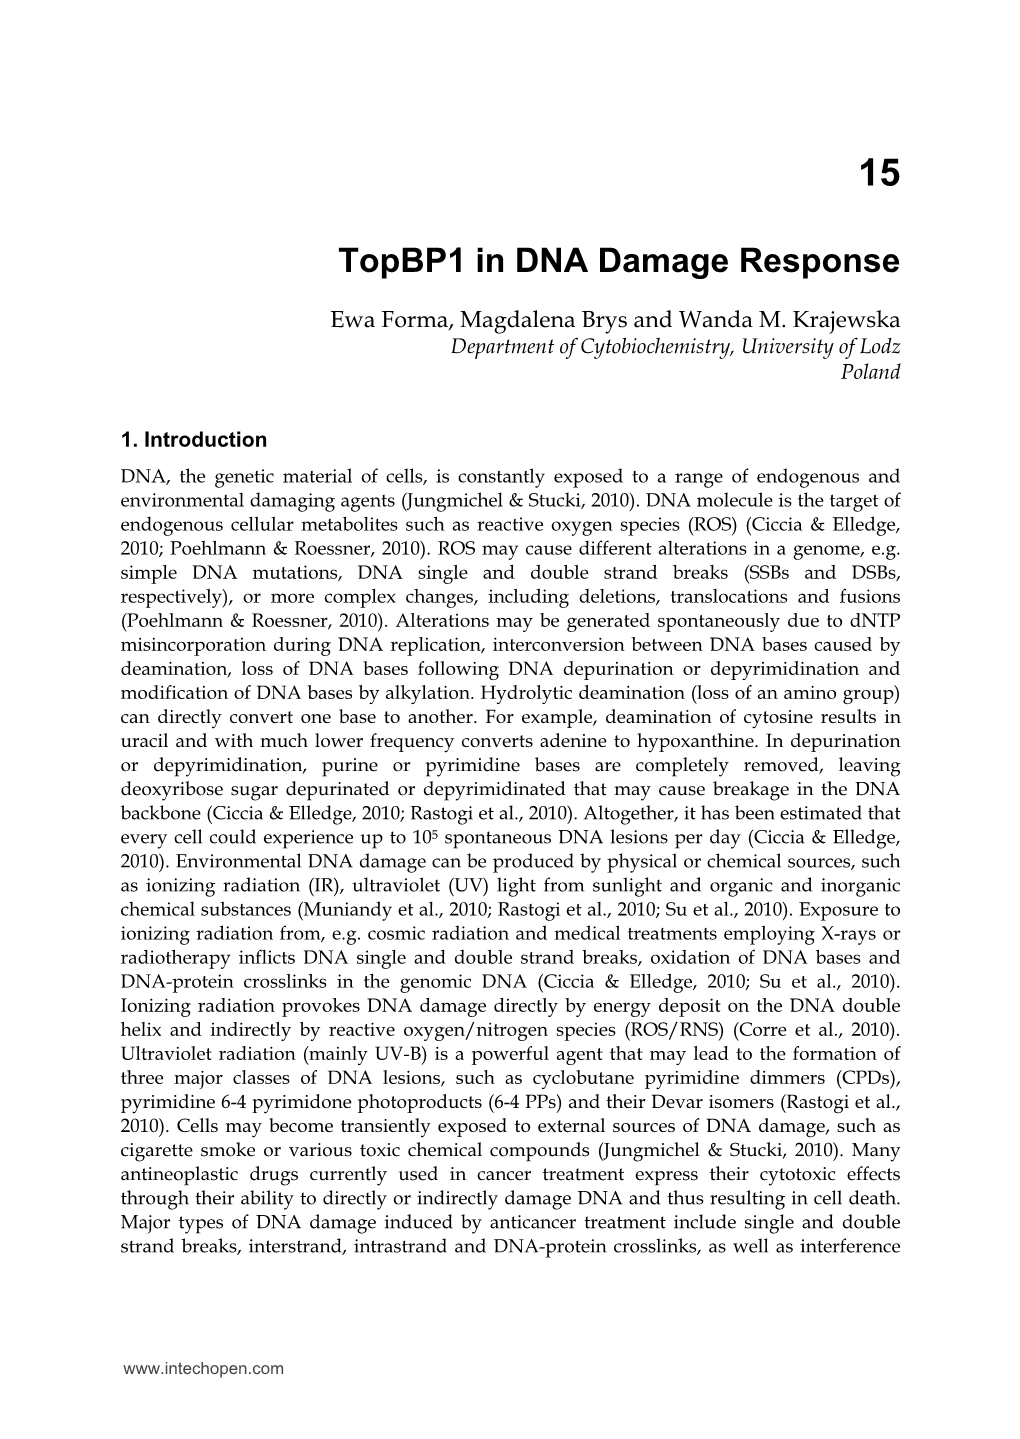 Topbp1 in DNA Damage Response